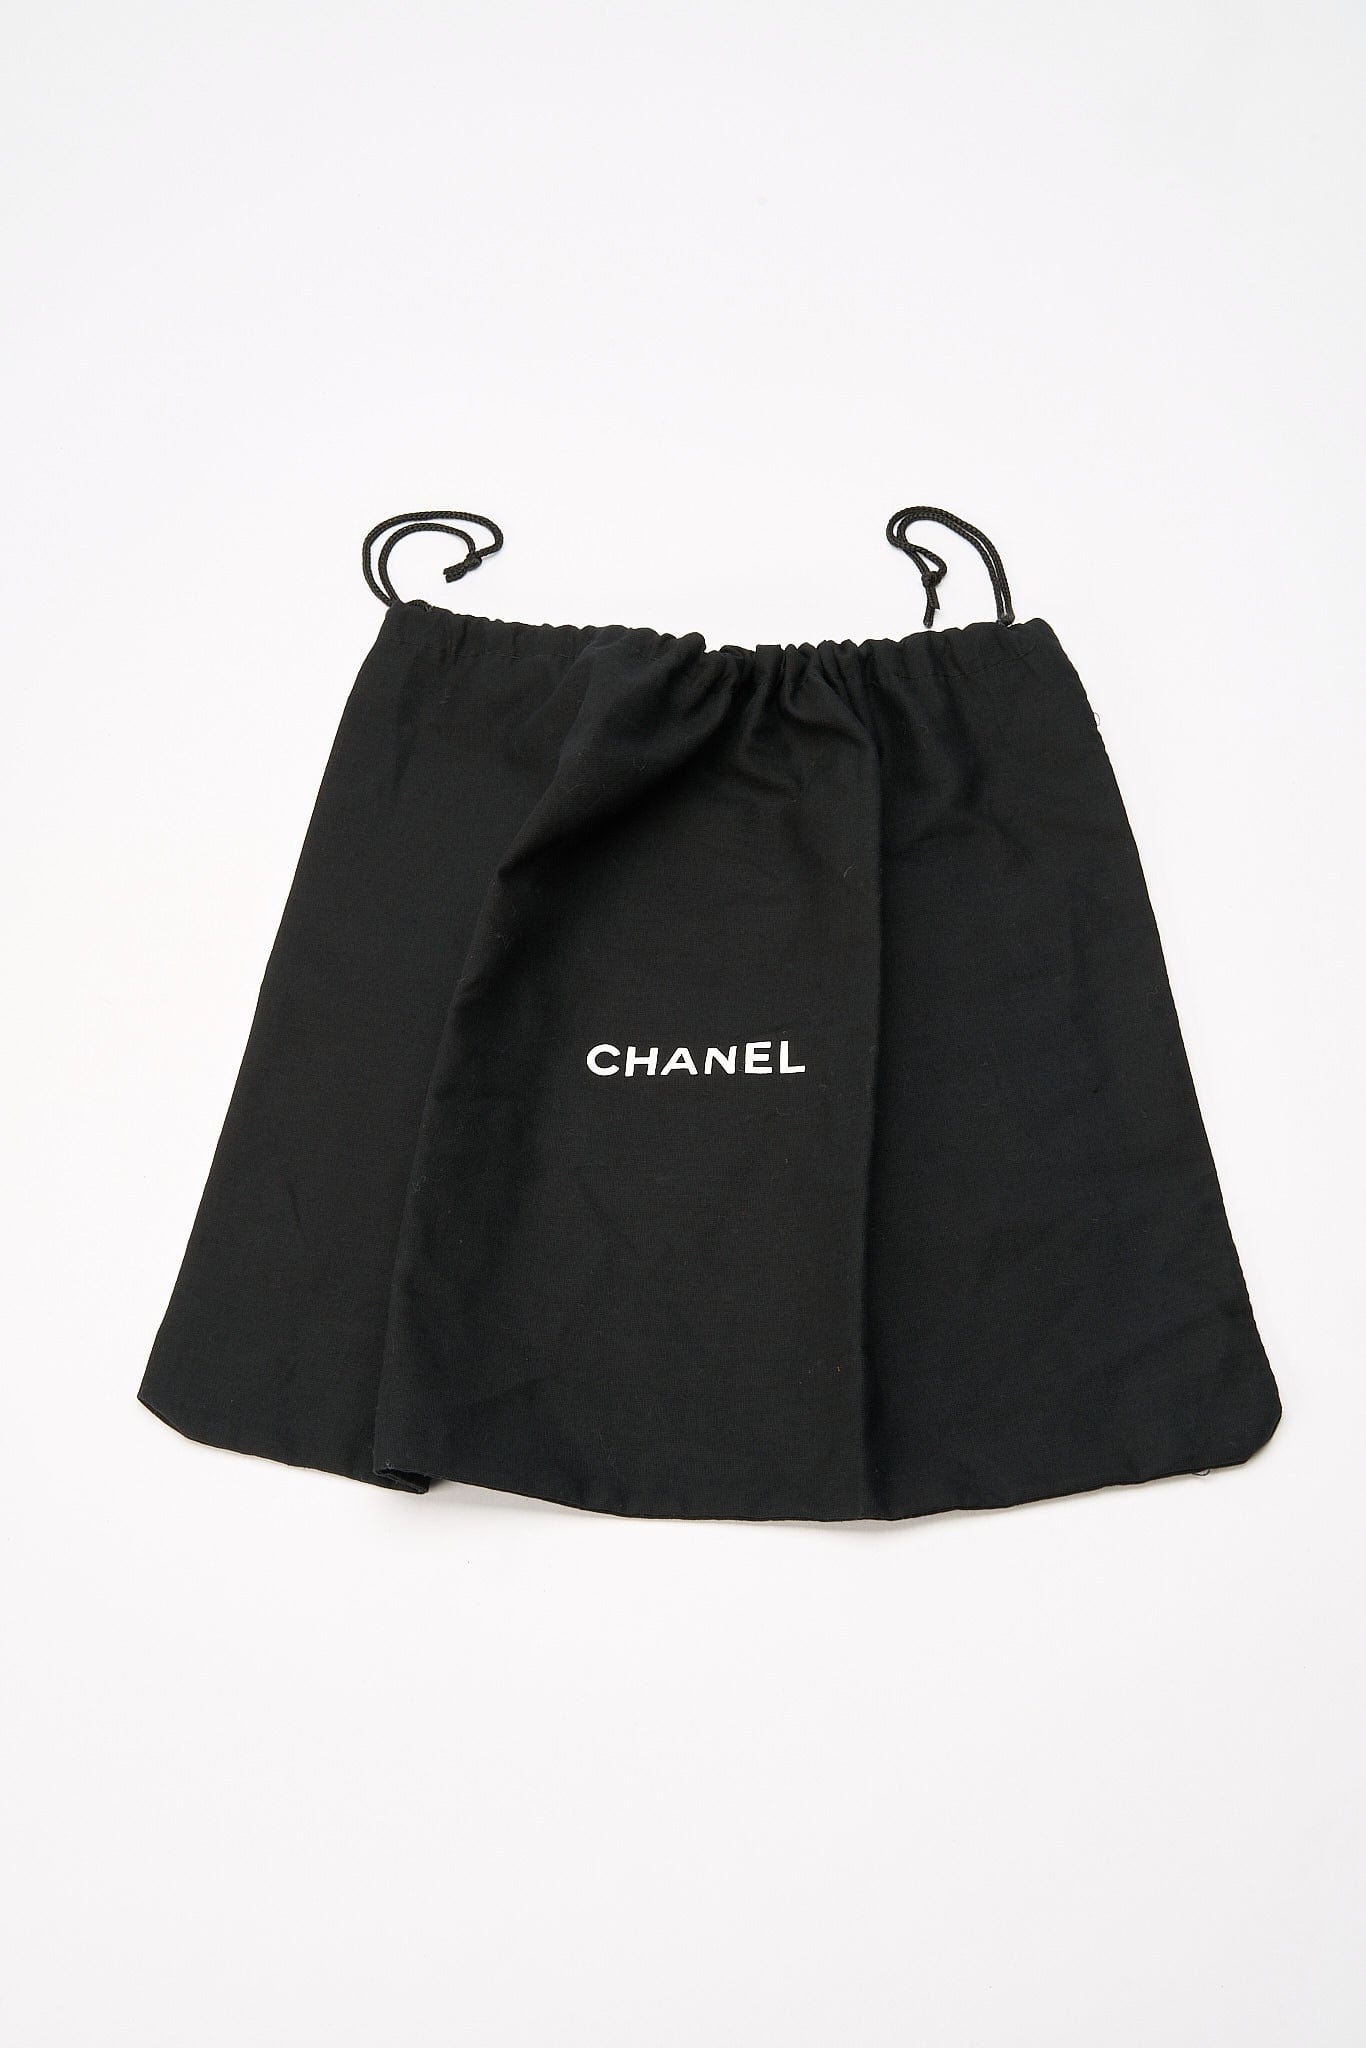 Chanel Black Fabric Single Flap Bag